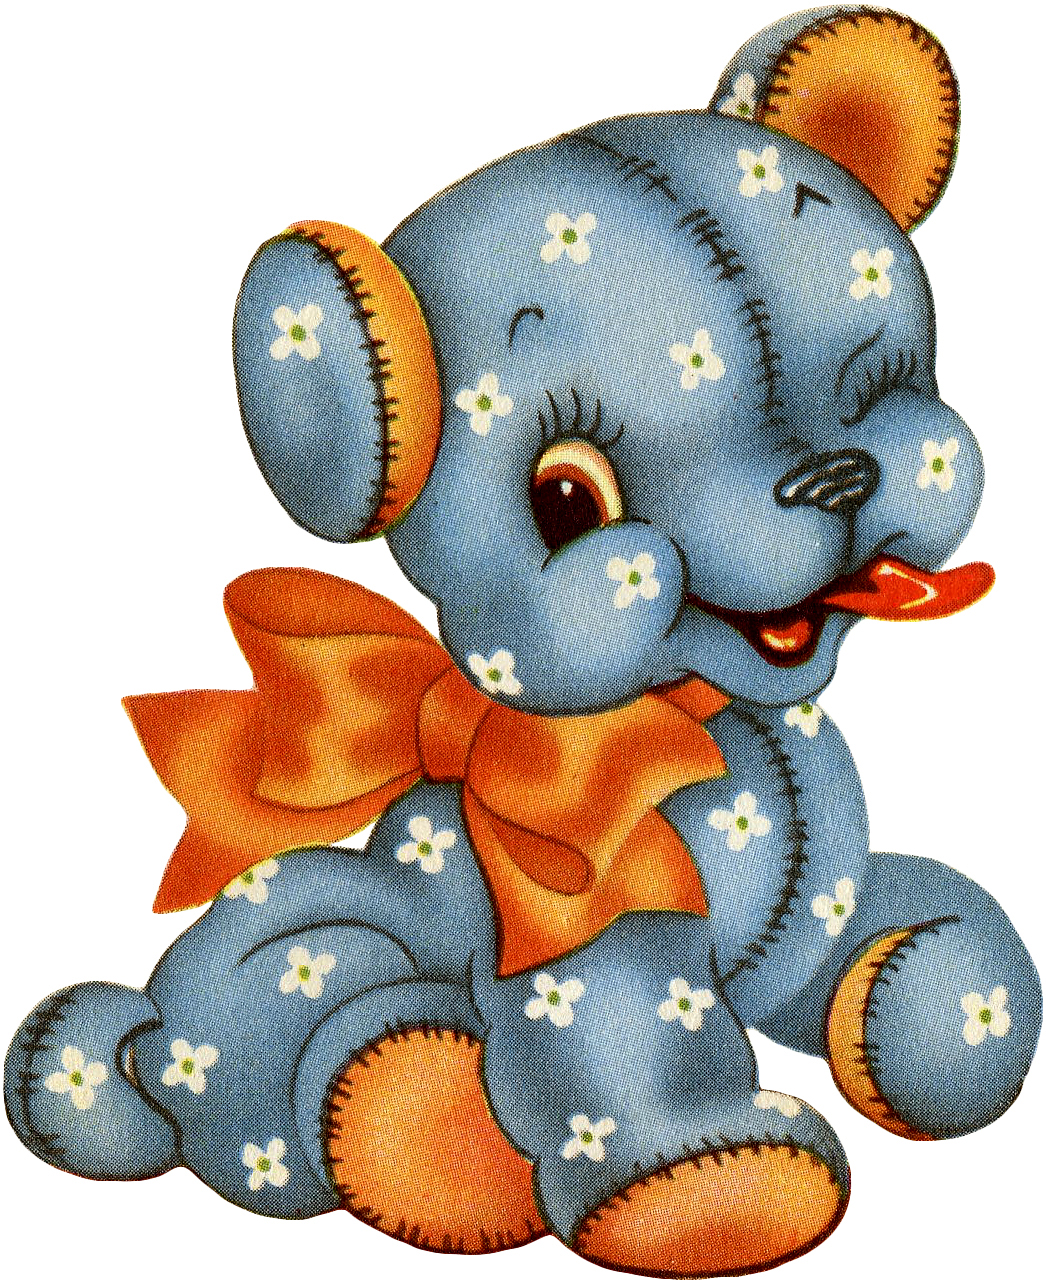 2 Retro Kitsch Calico Stuffed Animal Illustrations - Blue! - The Graphics Fairy